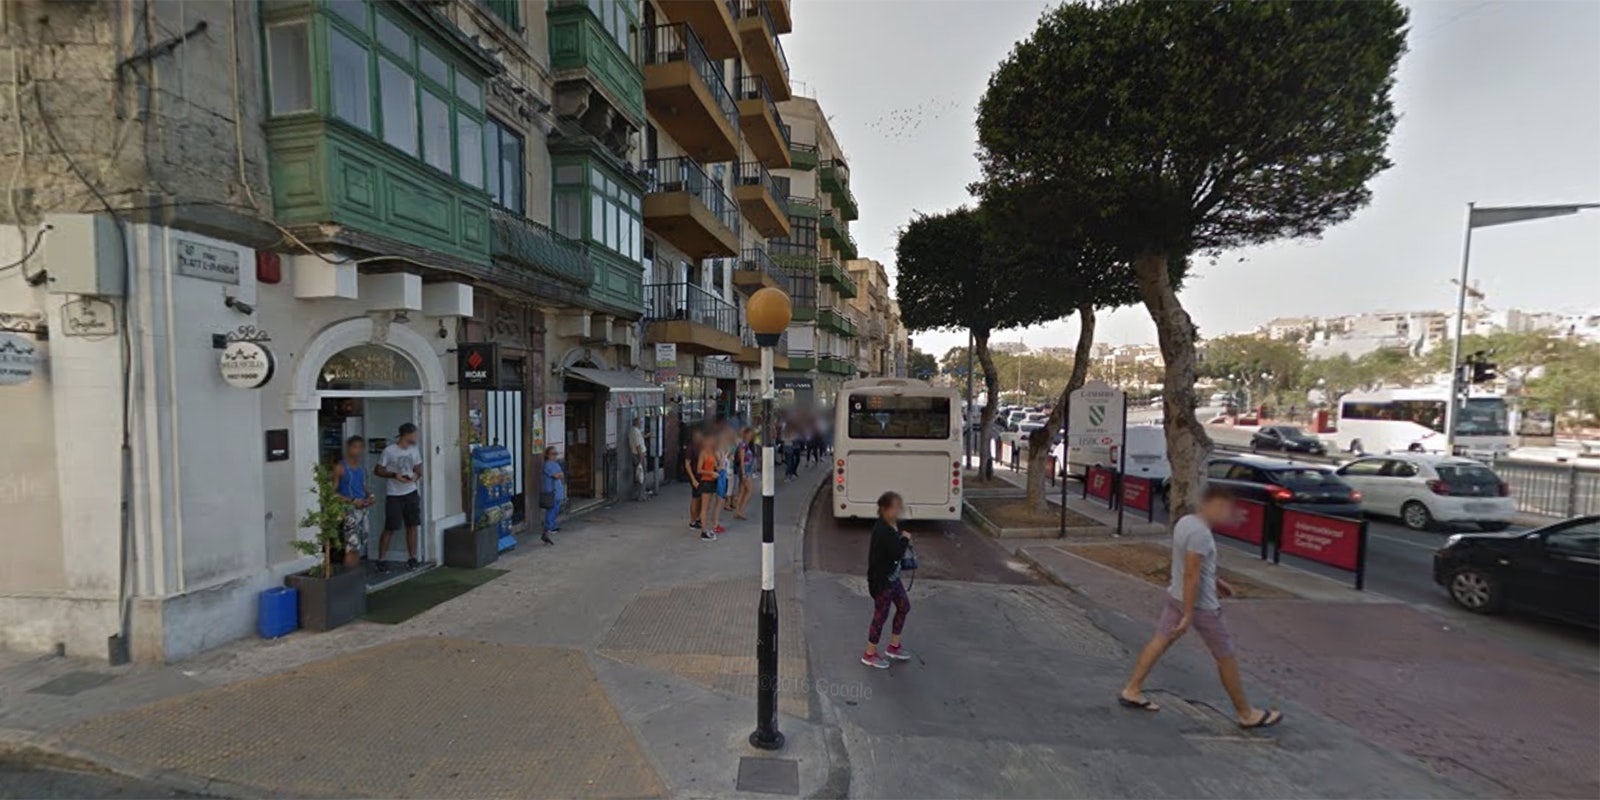 malta bus stop trans woman attacked